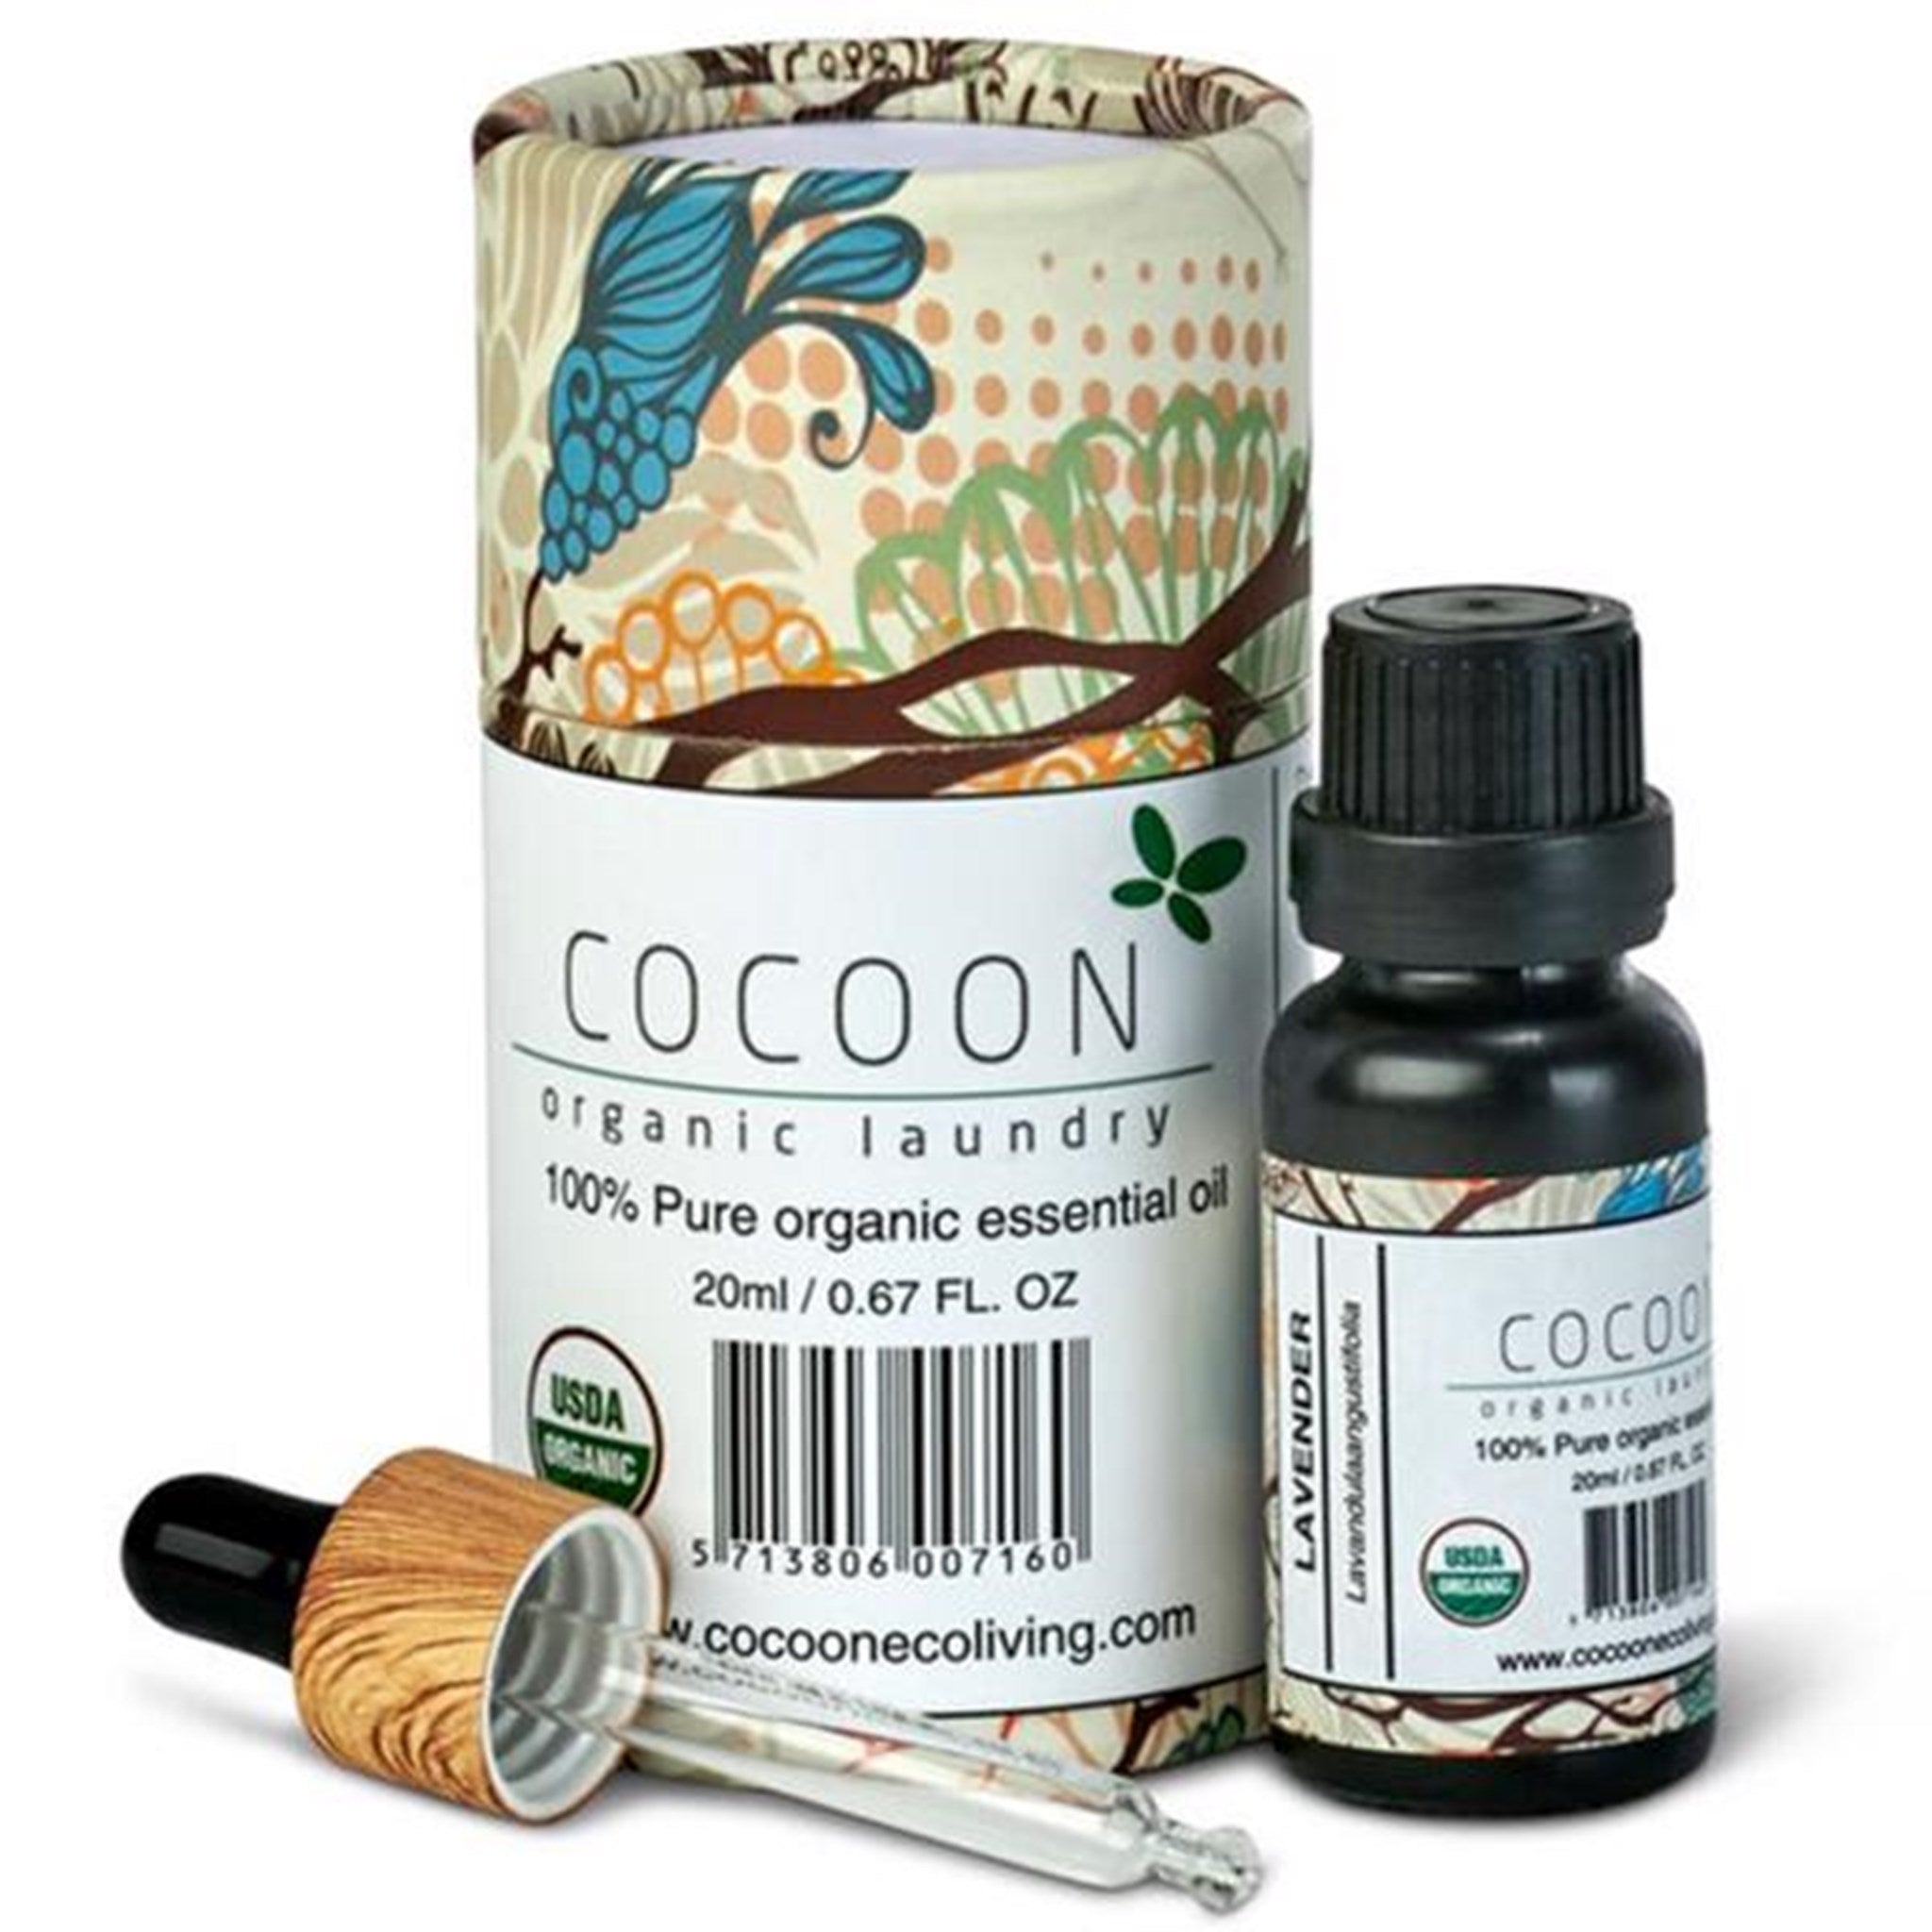 Cocoon Organic Laundry Lavender Oil 20 ml.